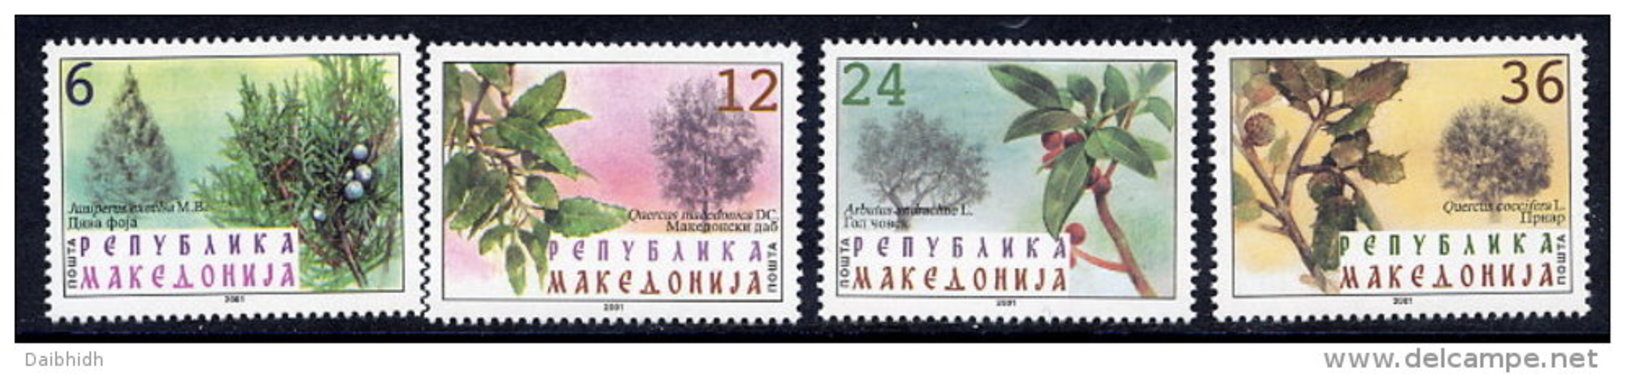 MACEDONIA  2001 Native Trees MNH / **.  Michel 234-37 - Nordmazedonien